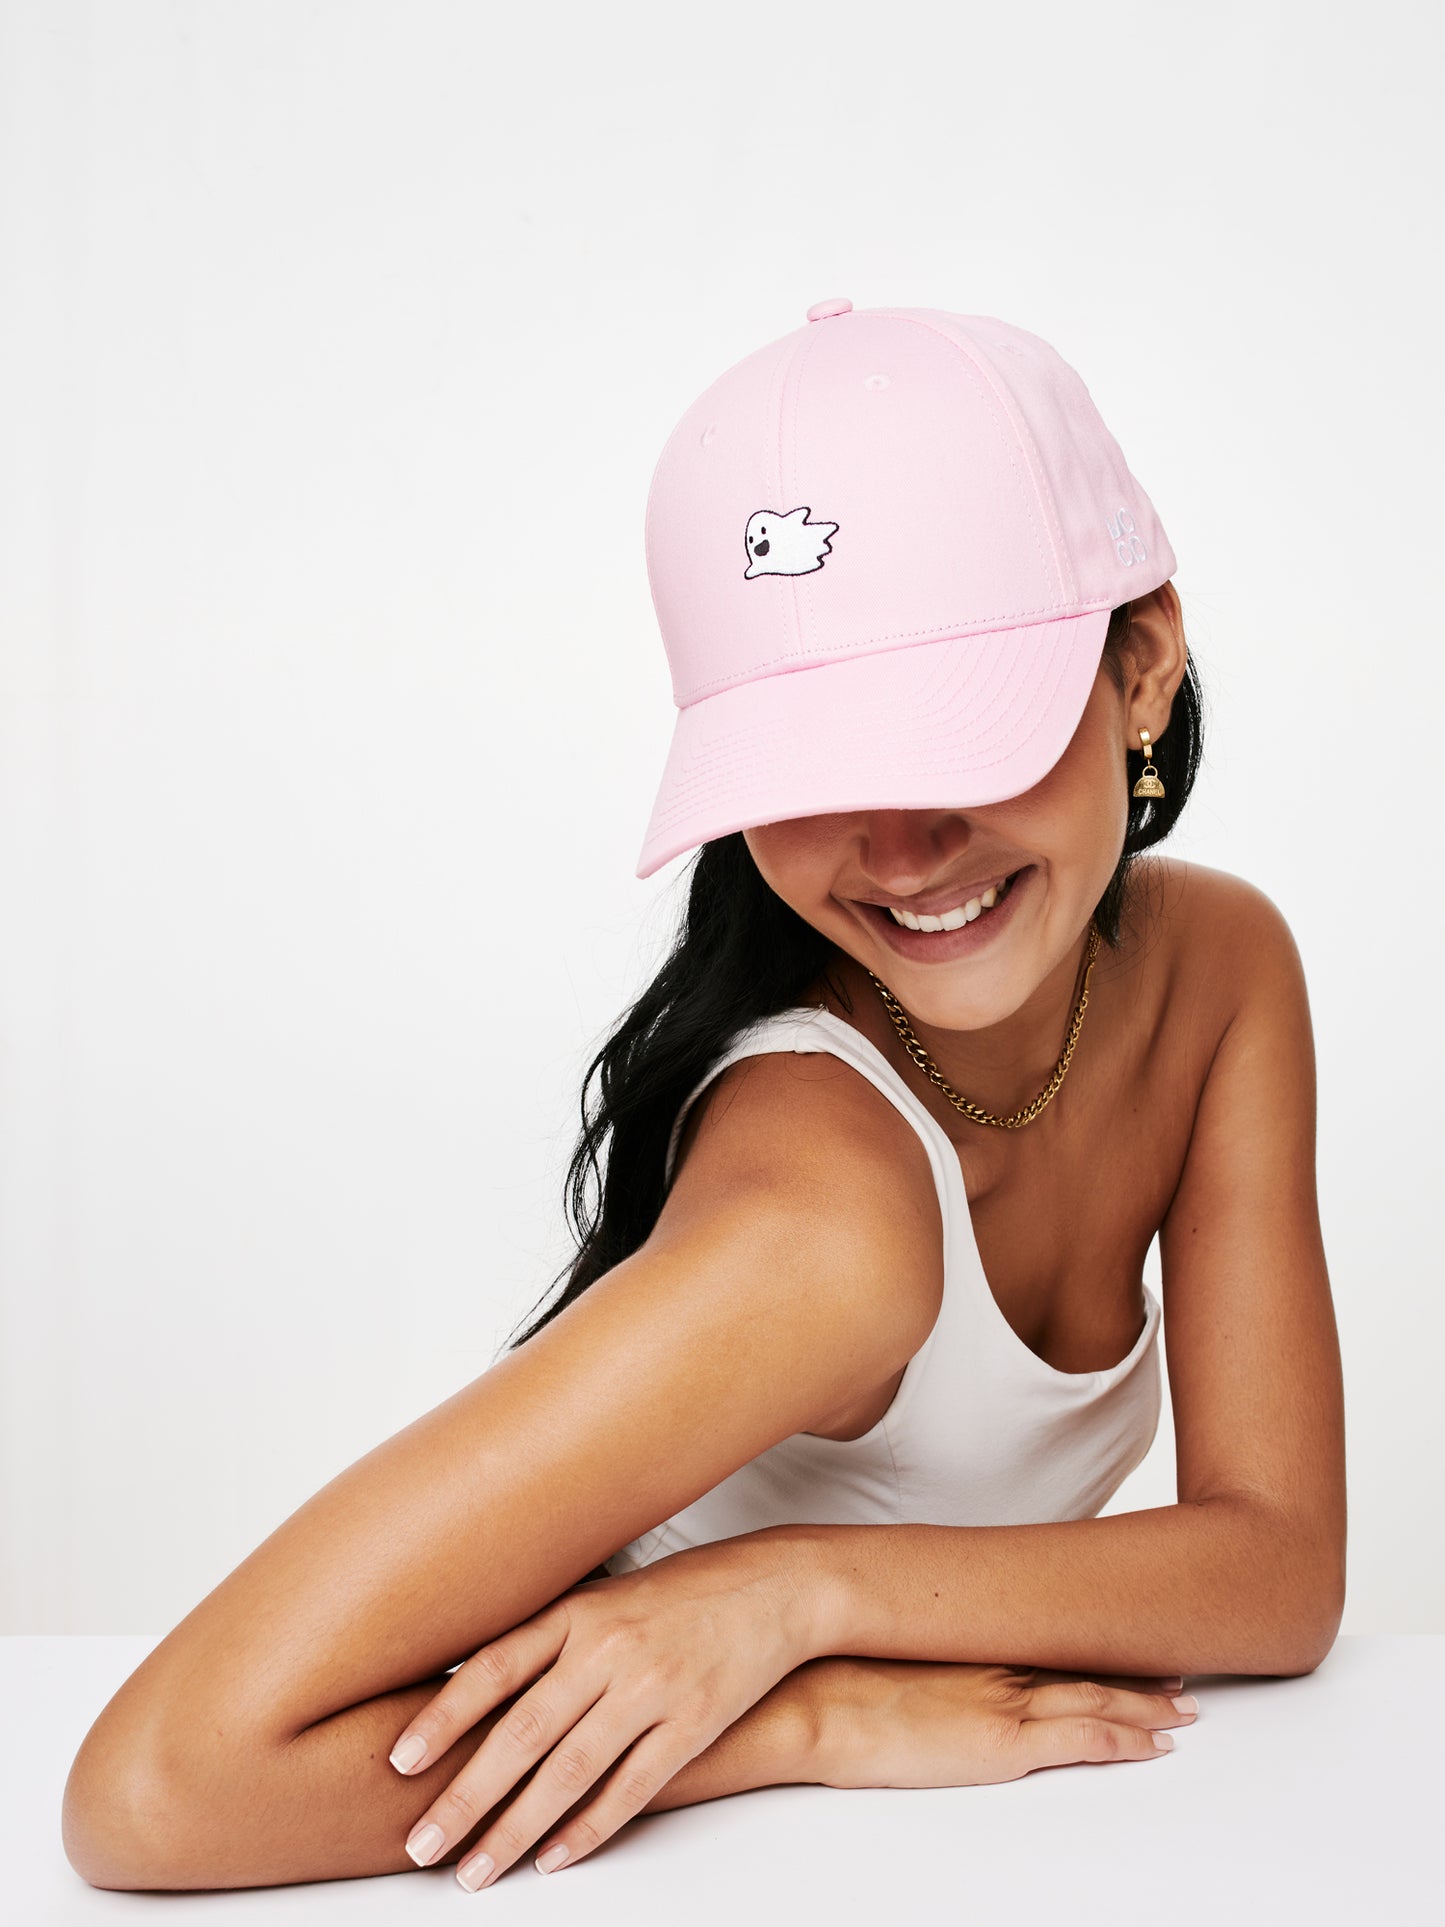 MOOD female model wearing Flying Ghost baseball cap in pink color smiling